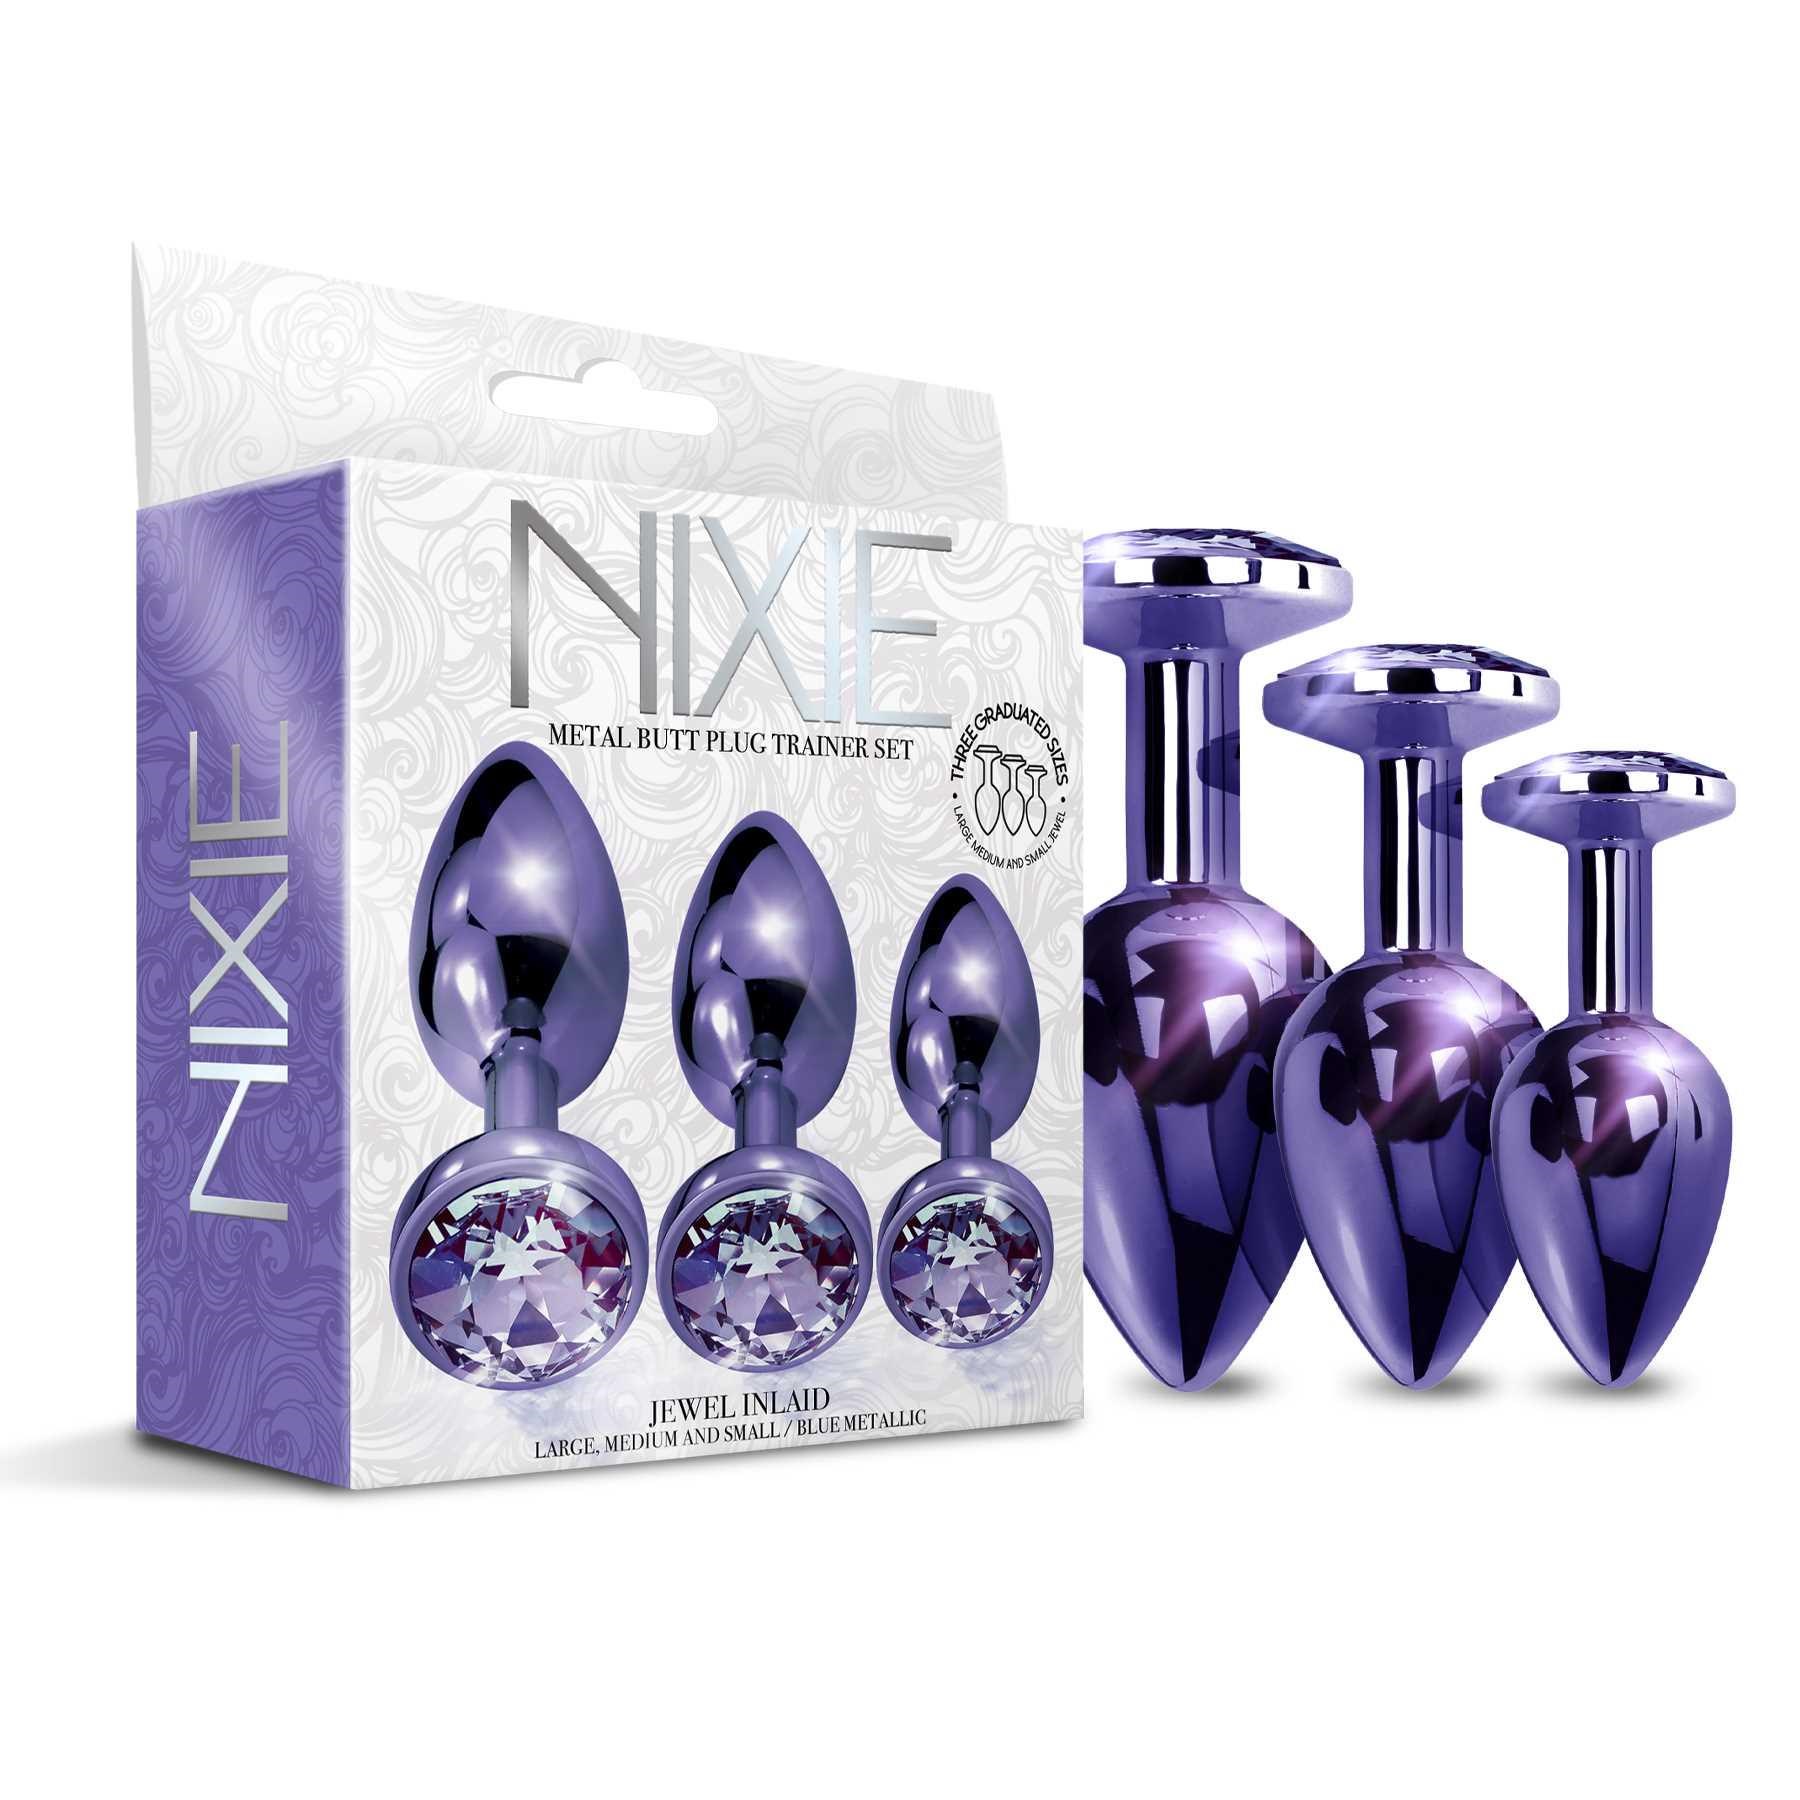 NIXIE Metal Butt Plug Trainer Set Metallic purple box set